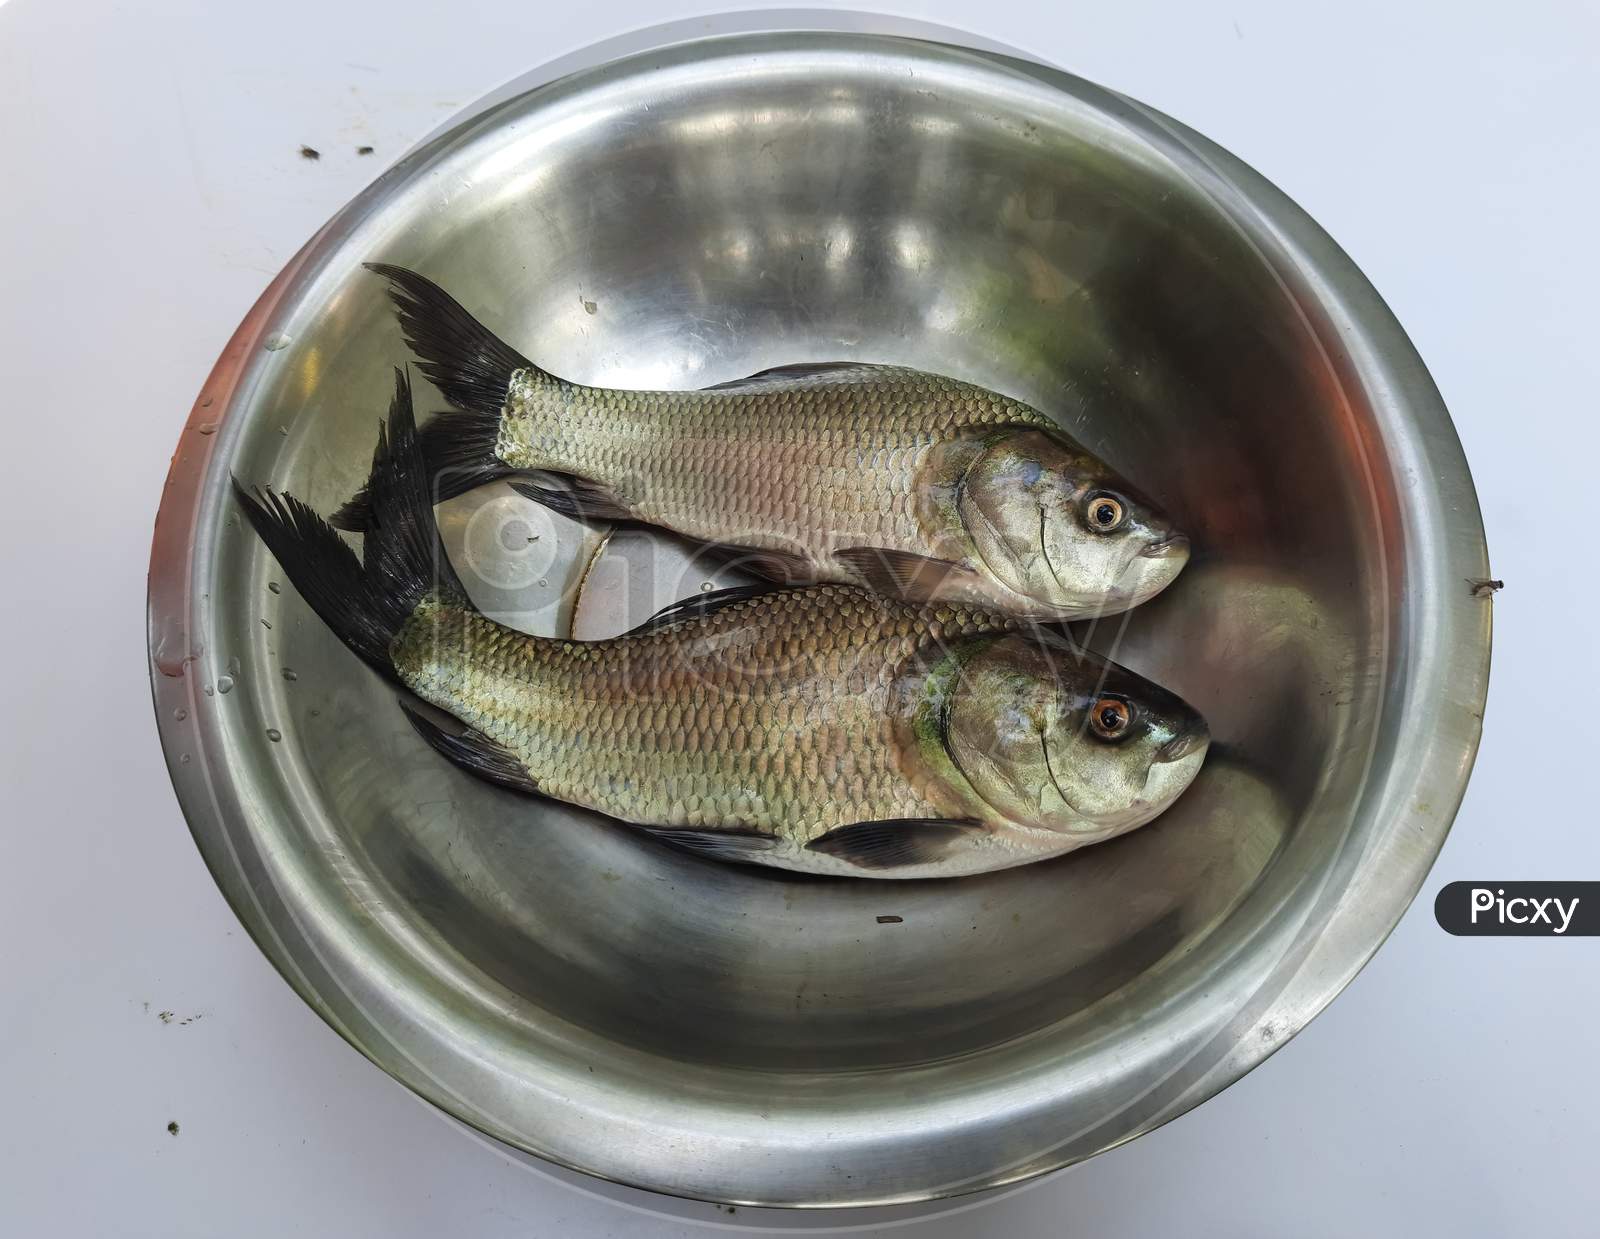 Two Catla fish image